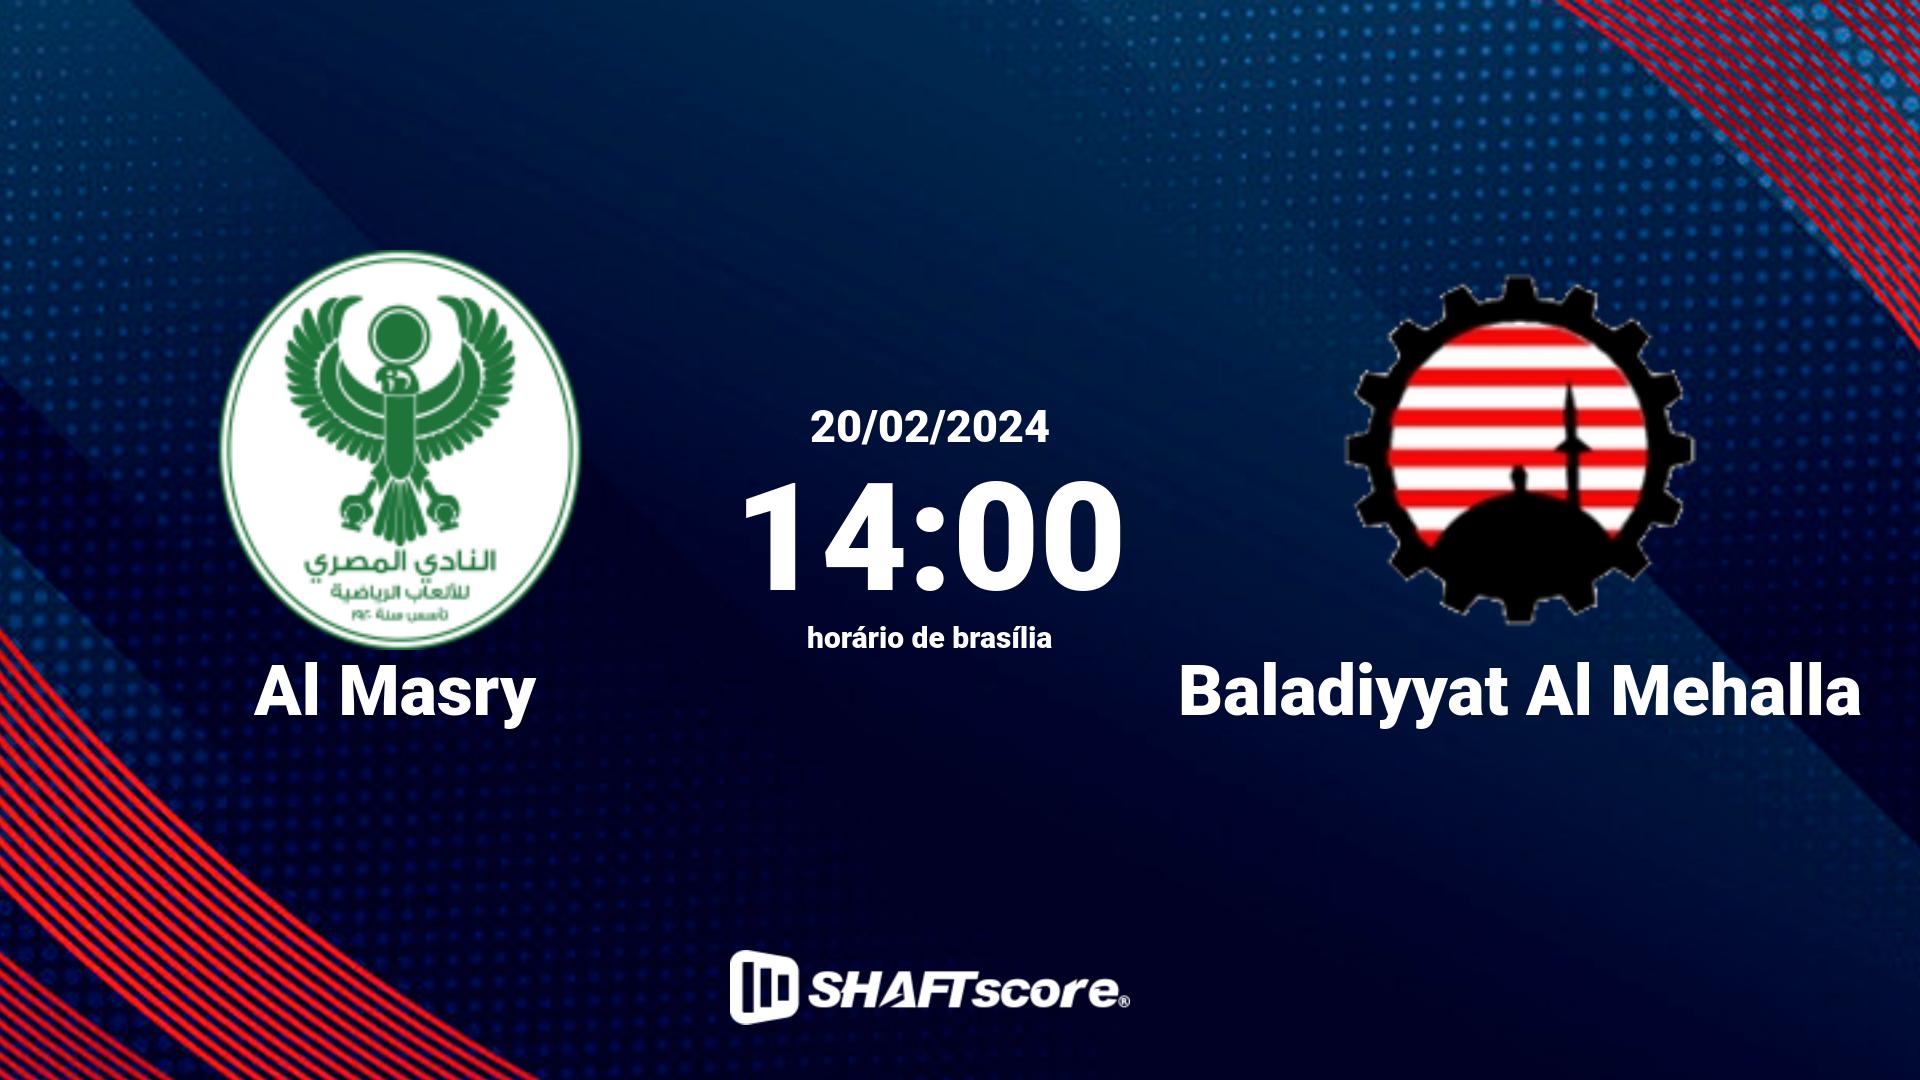 Estatísticas do jogo Al Masry vs Baladiyyat Al Mehalla 20.02 14:00